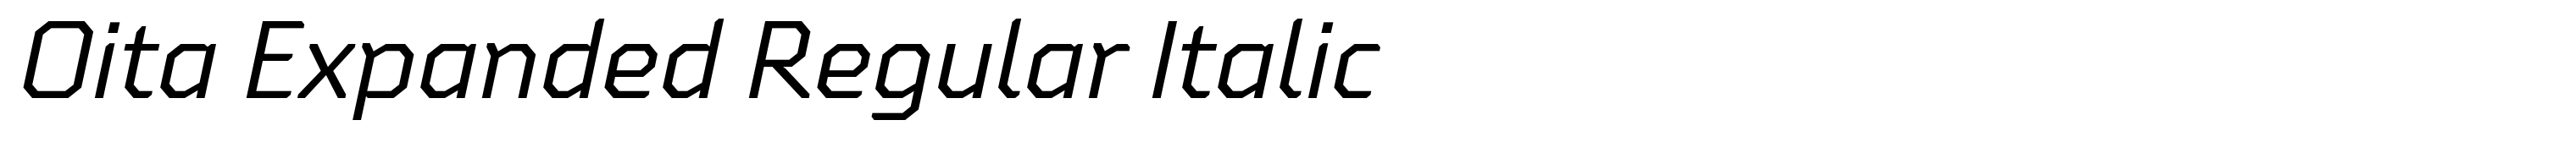 Oita Expanded Regular Italic